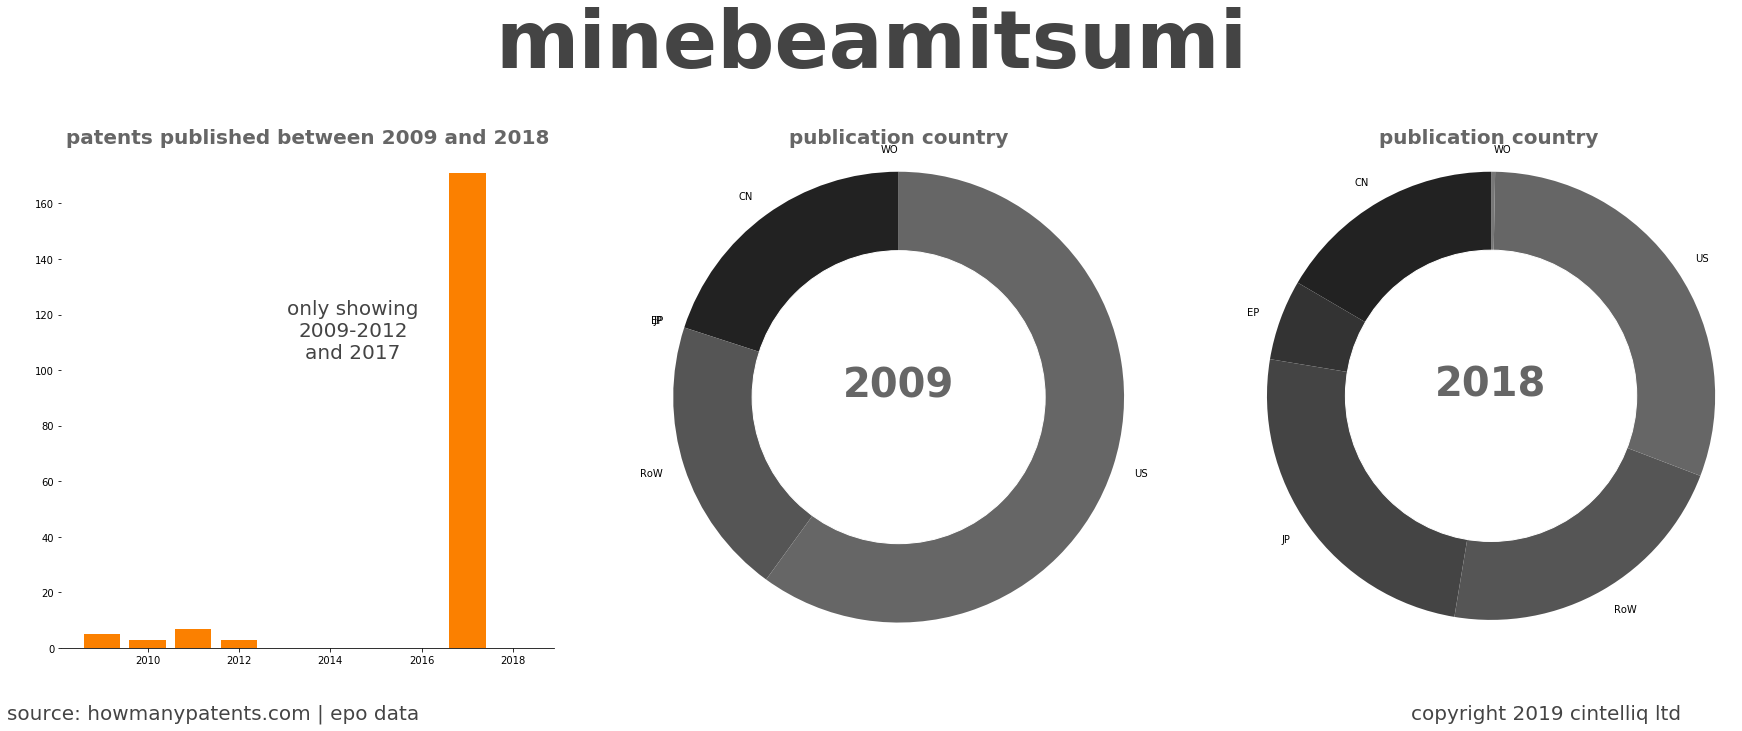 summary of patents for Minebeamitsumi